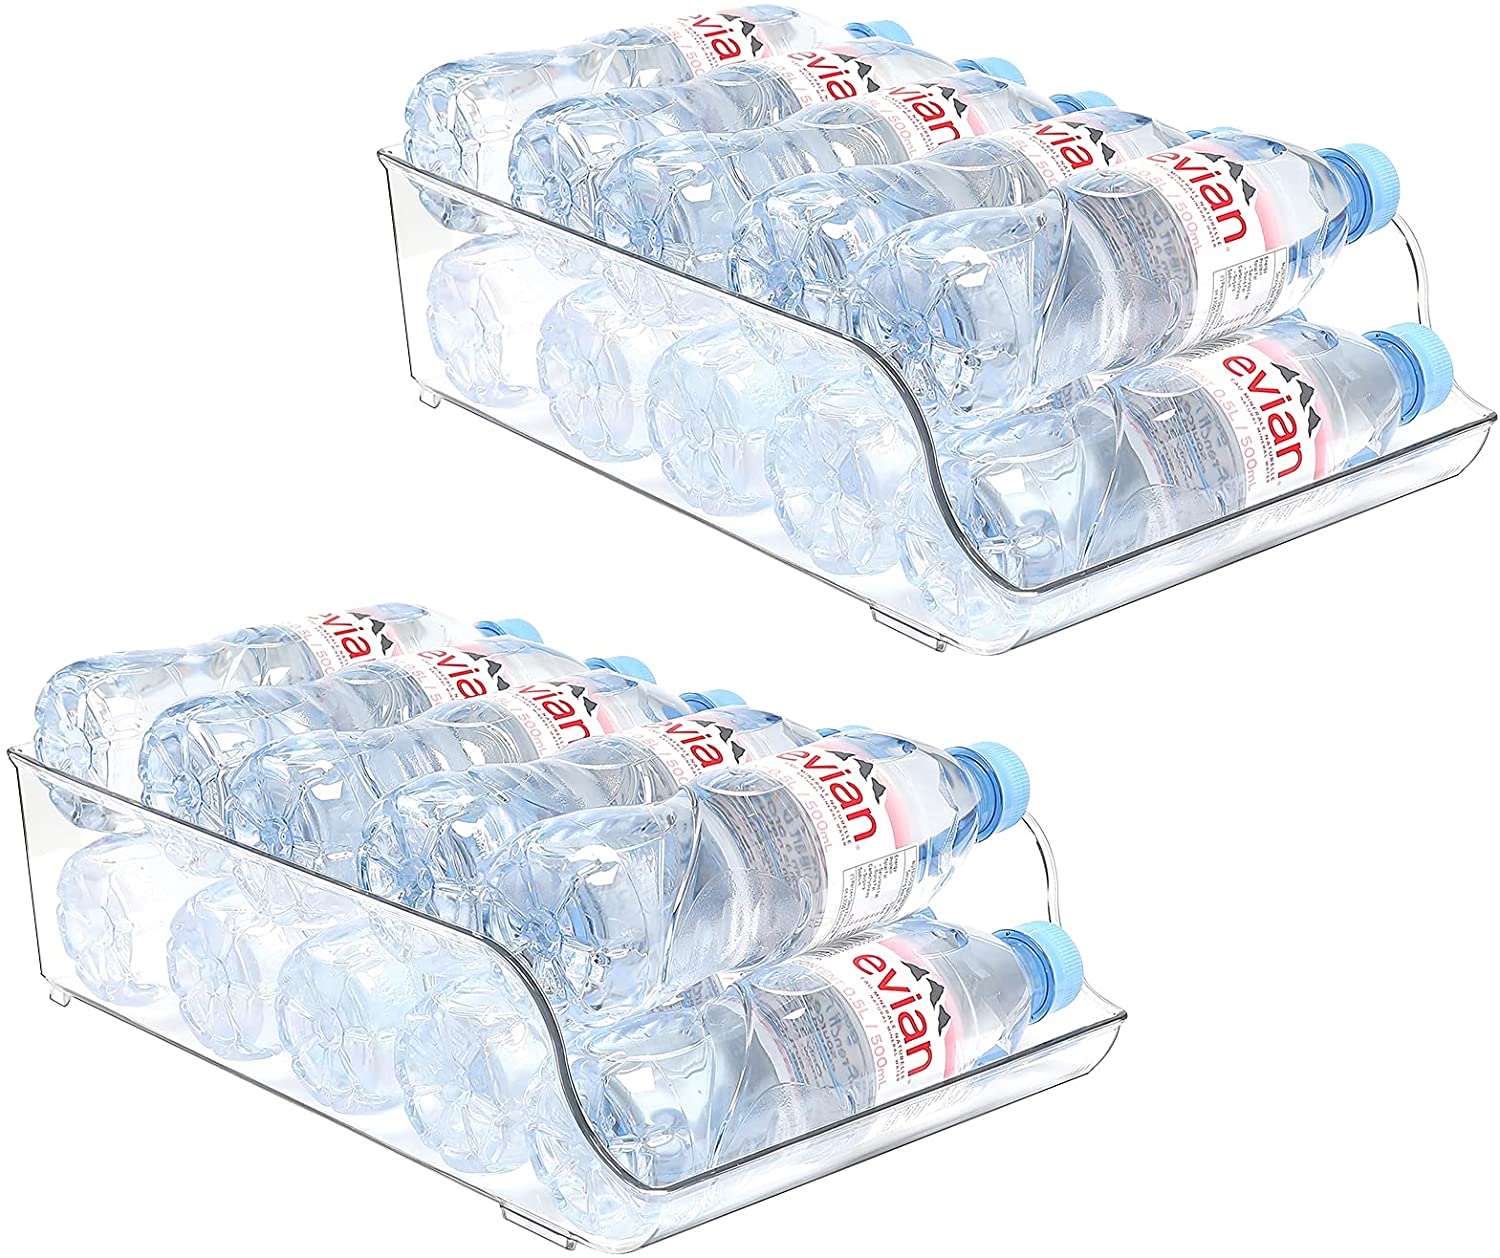 Puricon 2 Pack Water Bottle Dispenser Organizer for Refrigerator, Clear Plastic 16.9oz Water Bottle Container Storage Bin for Fridge Freezer Pantry